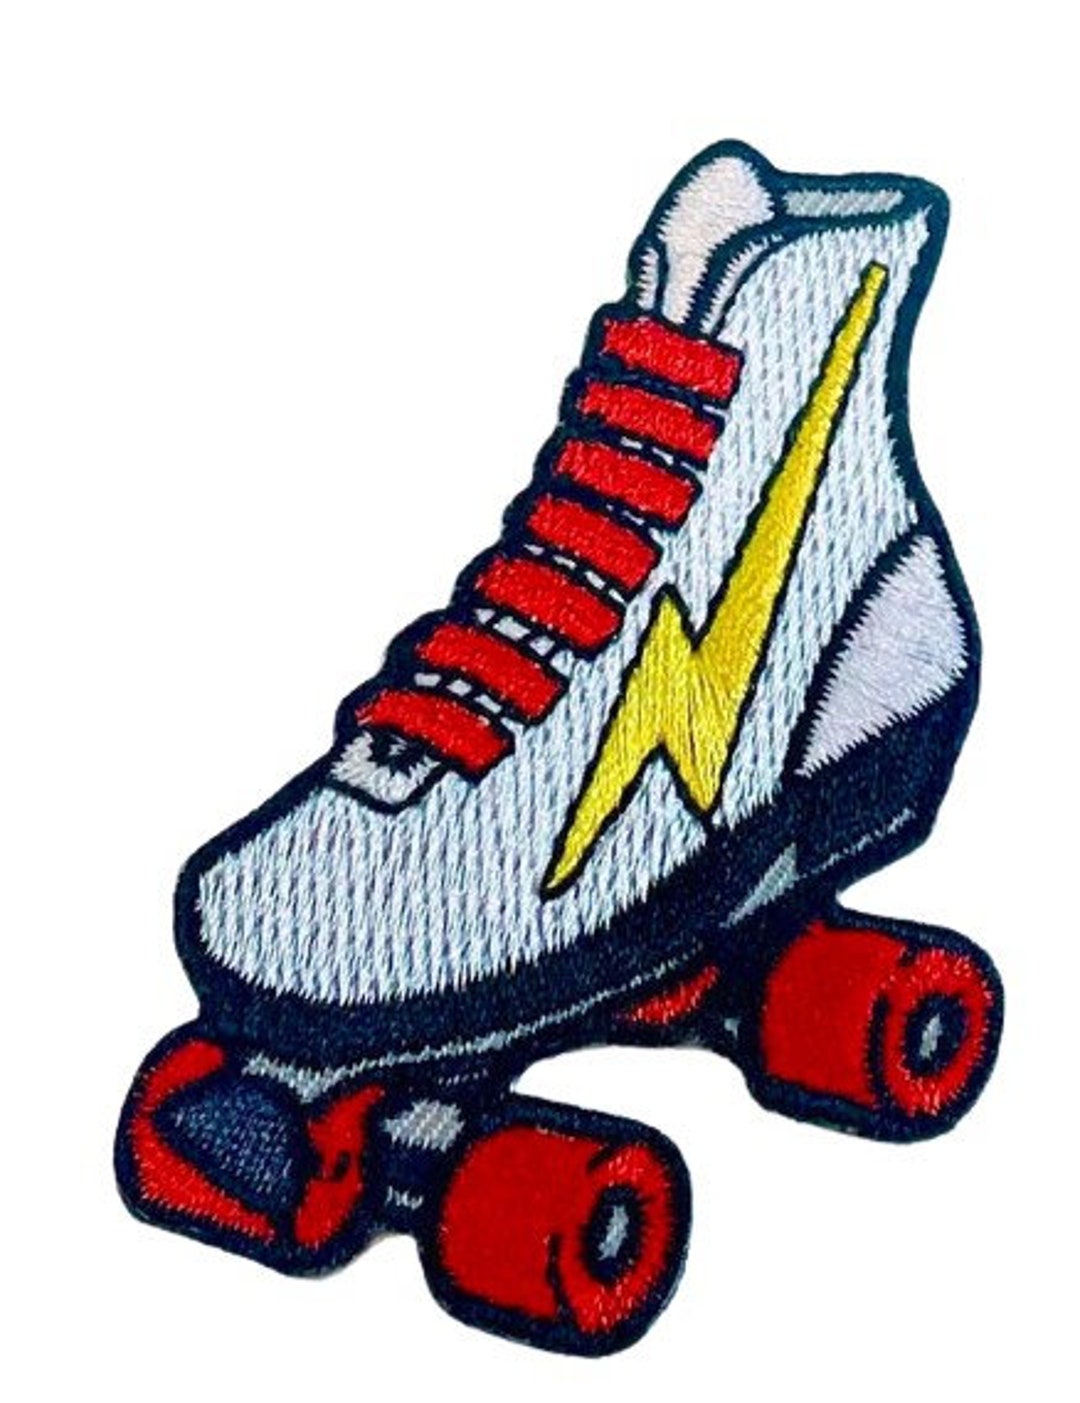 SKATE Patch Roller Skate With Lighting BOLT Skating Quality - Etsy